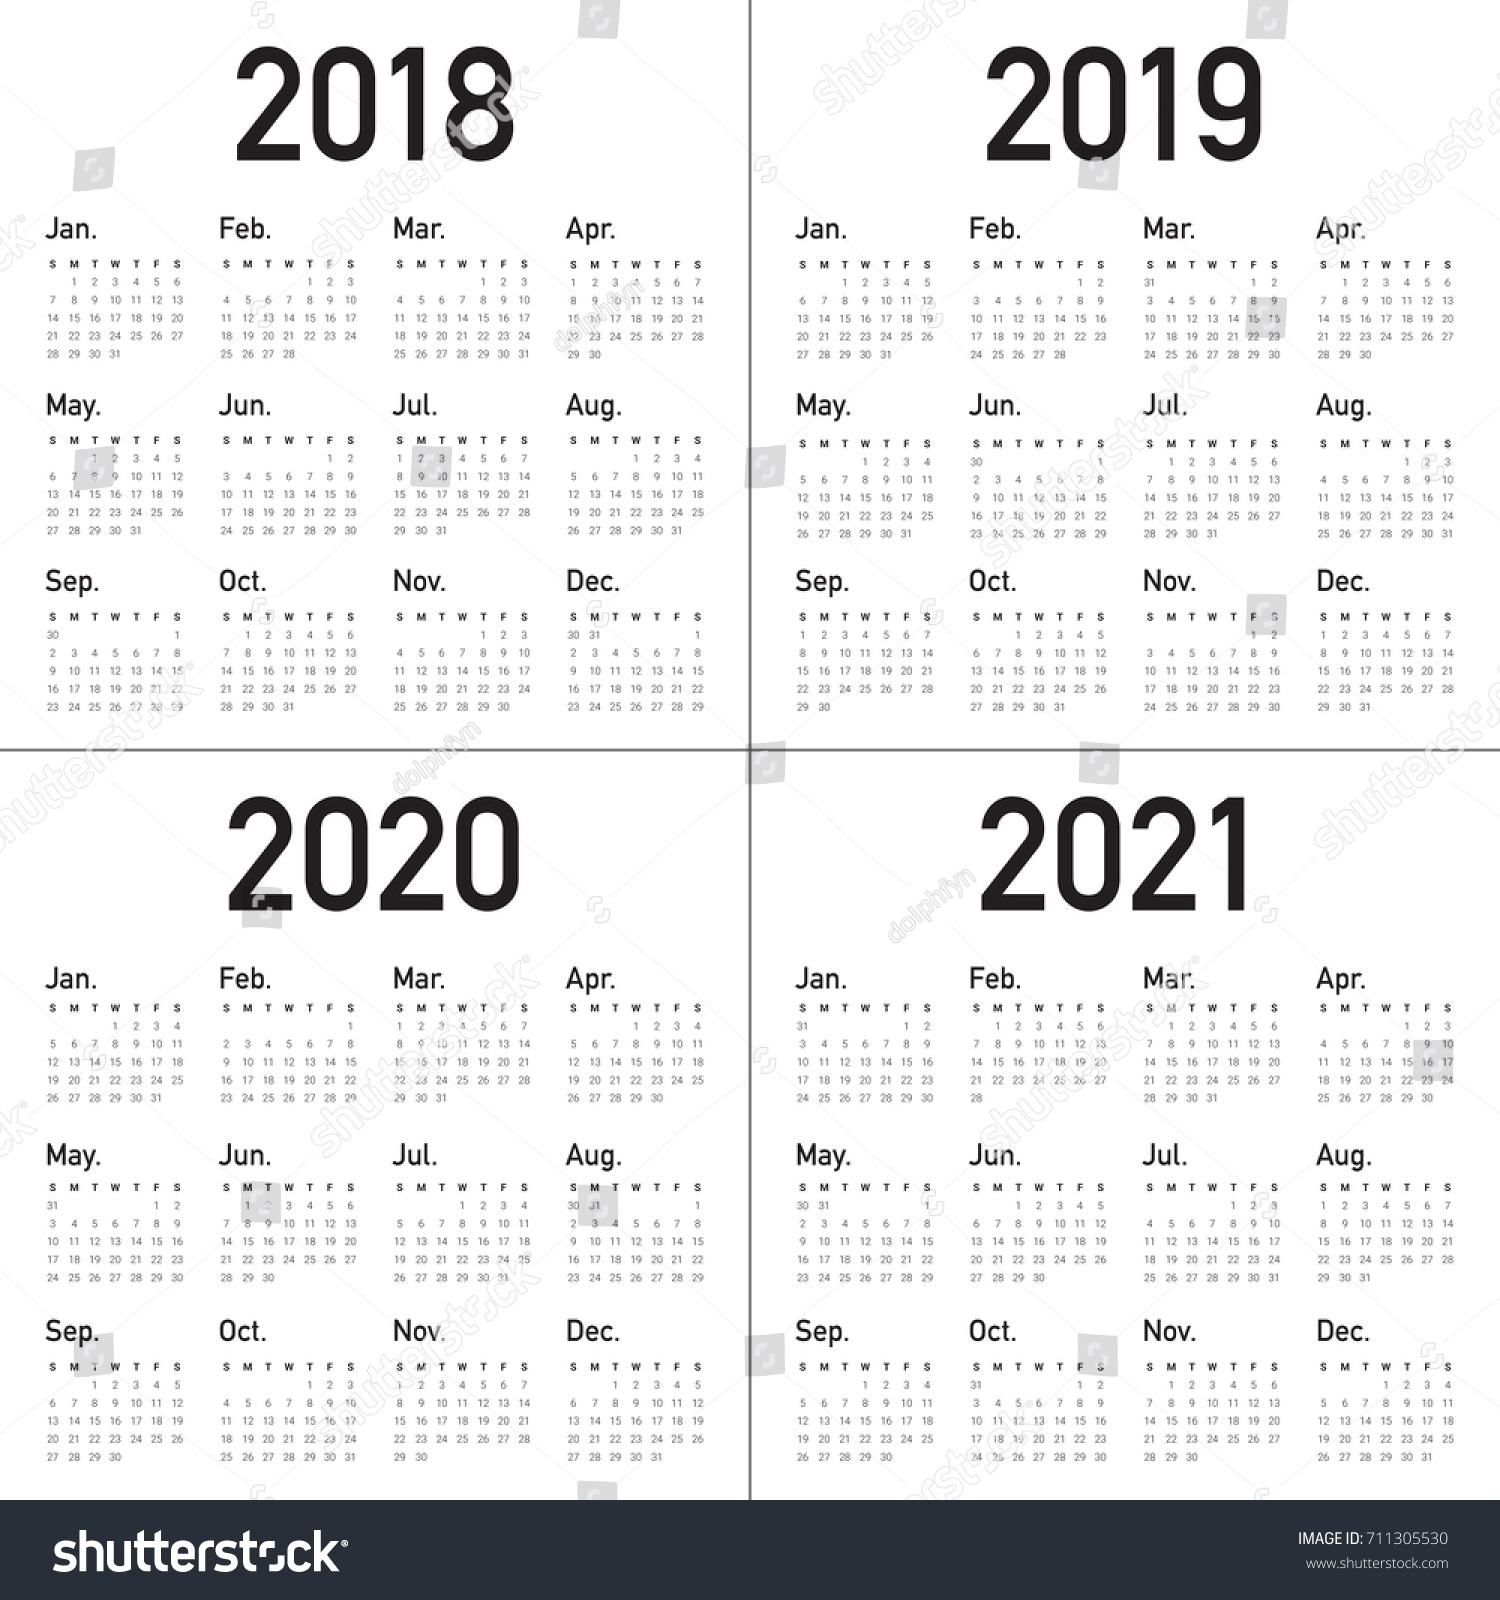 Printable 3 Year Calendar 2019 To 2021 | Printable Calendar 2019 3 for Three Year Calendar 2020 -2023